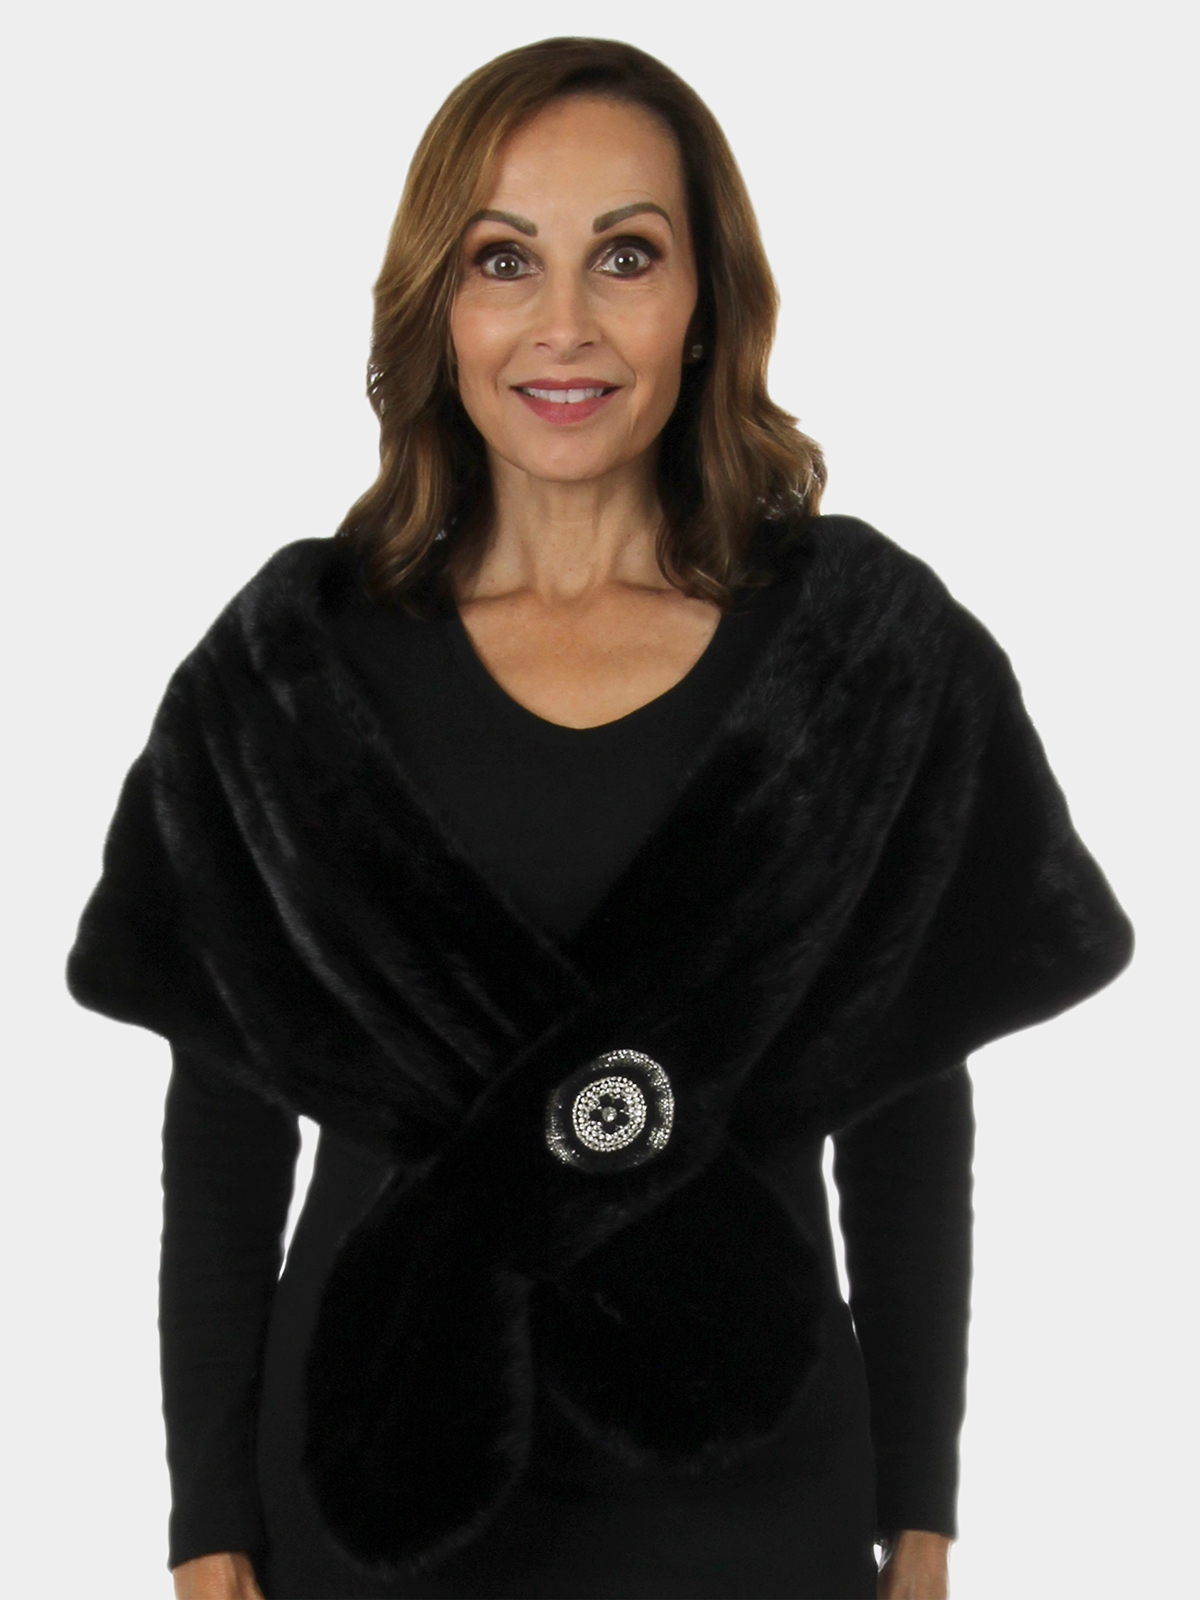 Woman's New Carolyn Rowan Black Short Nap Mink Fur Stole Wrap